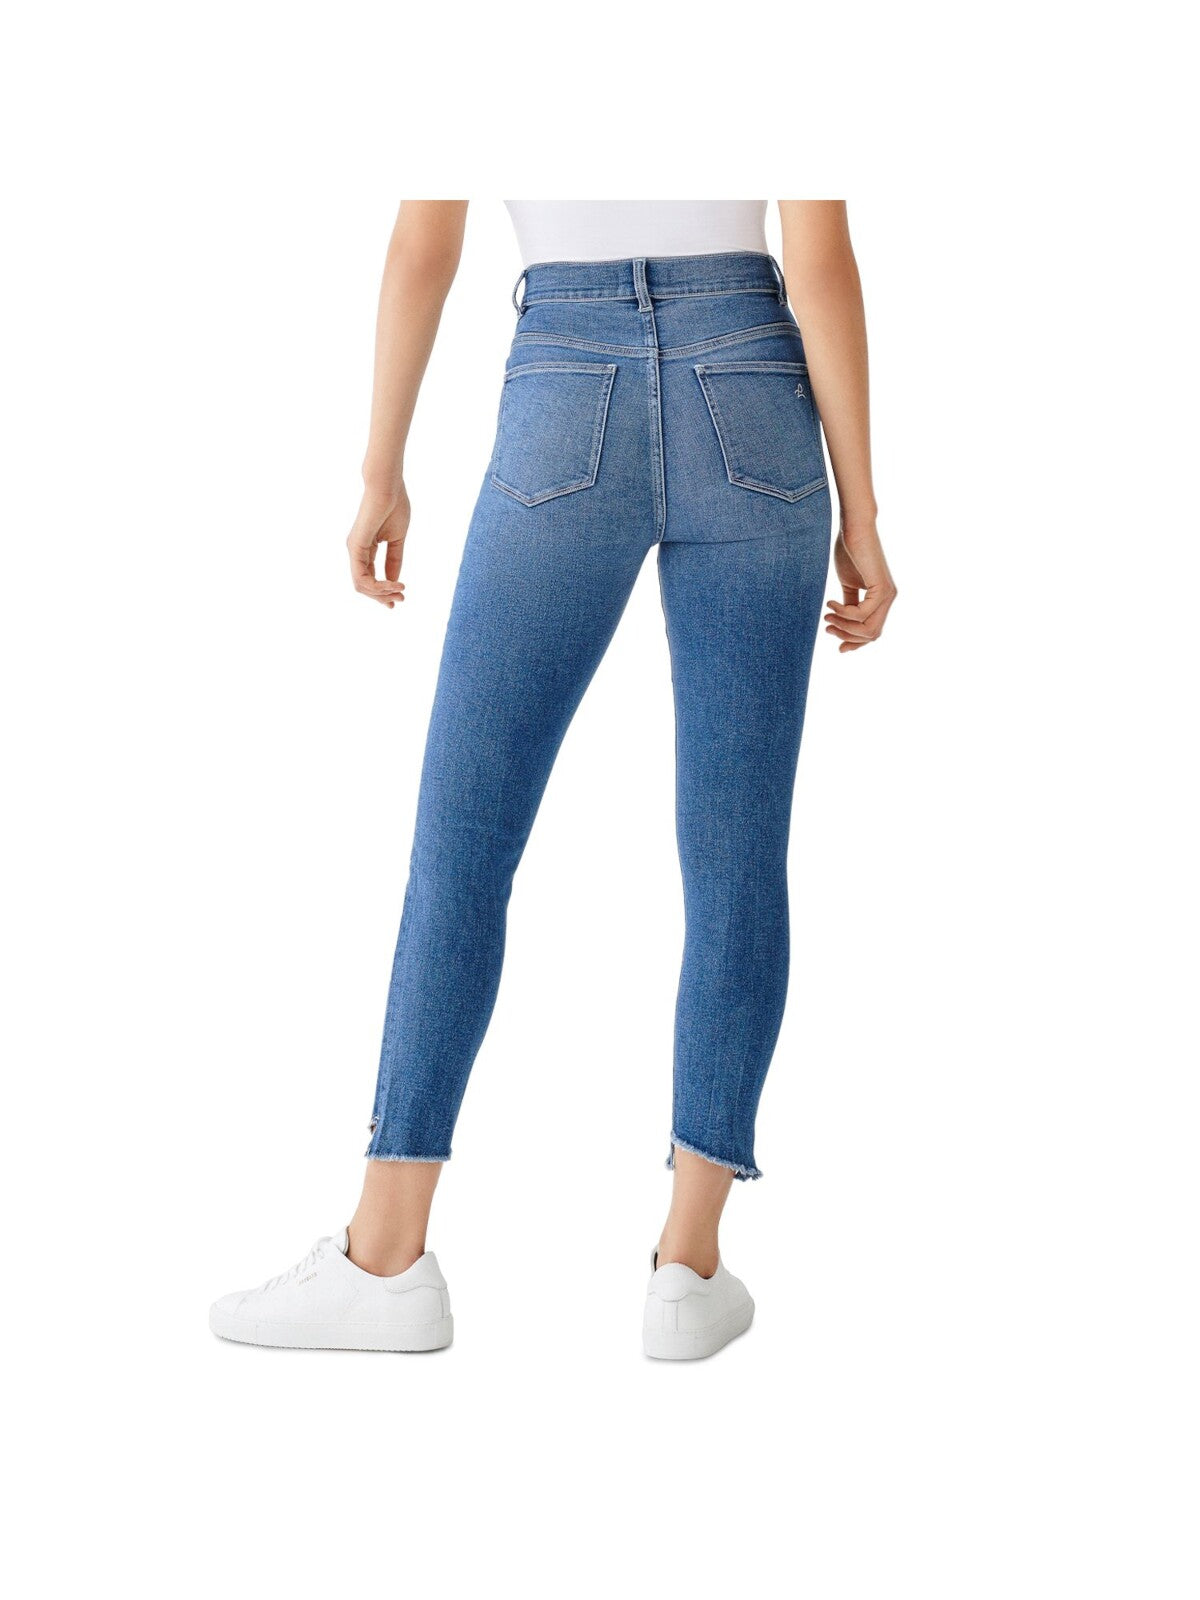 DL1961 Womens Blue Denim Zippered Pocketed Skinny High Waist Jeans Juniors 27